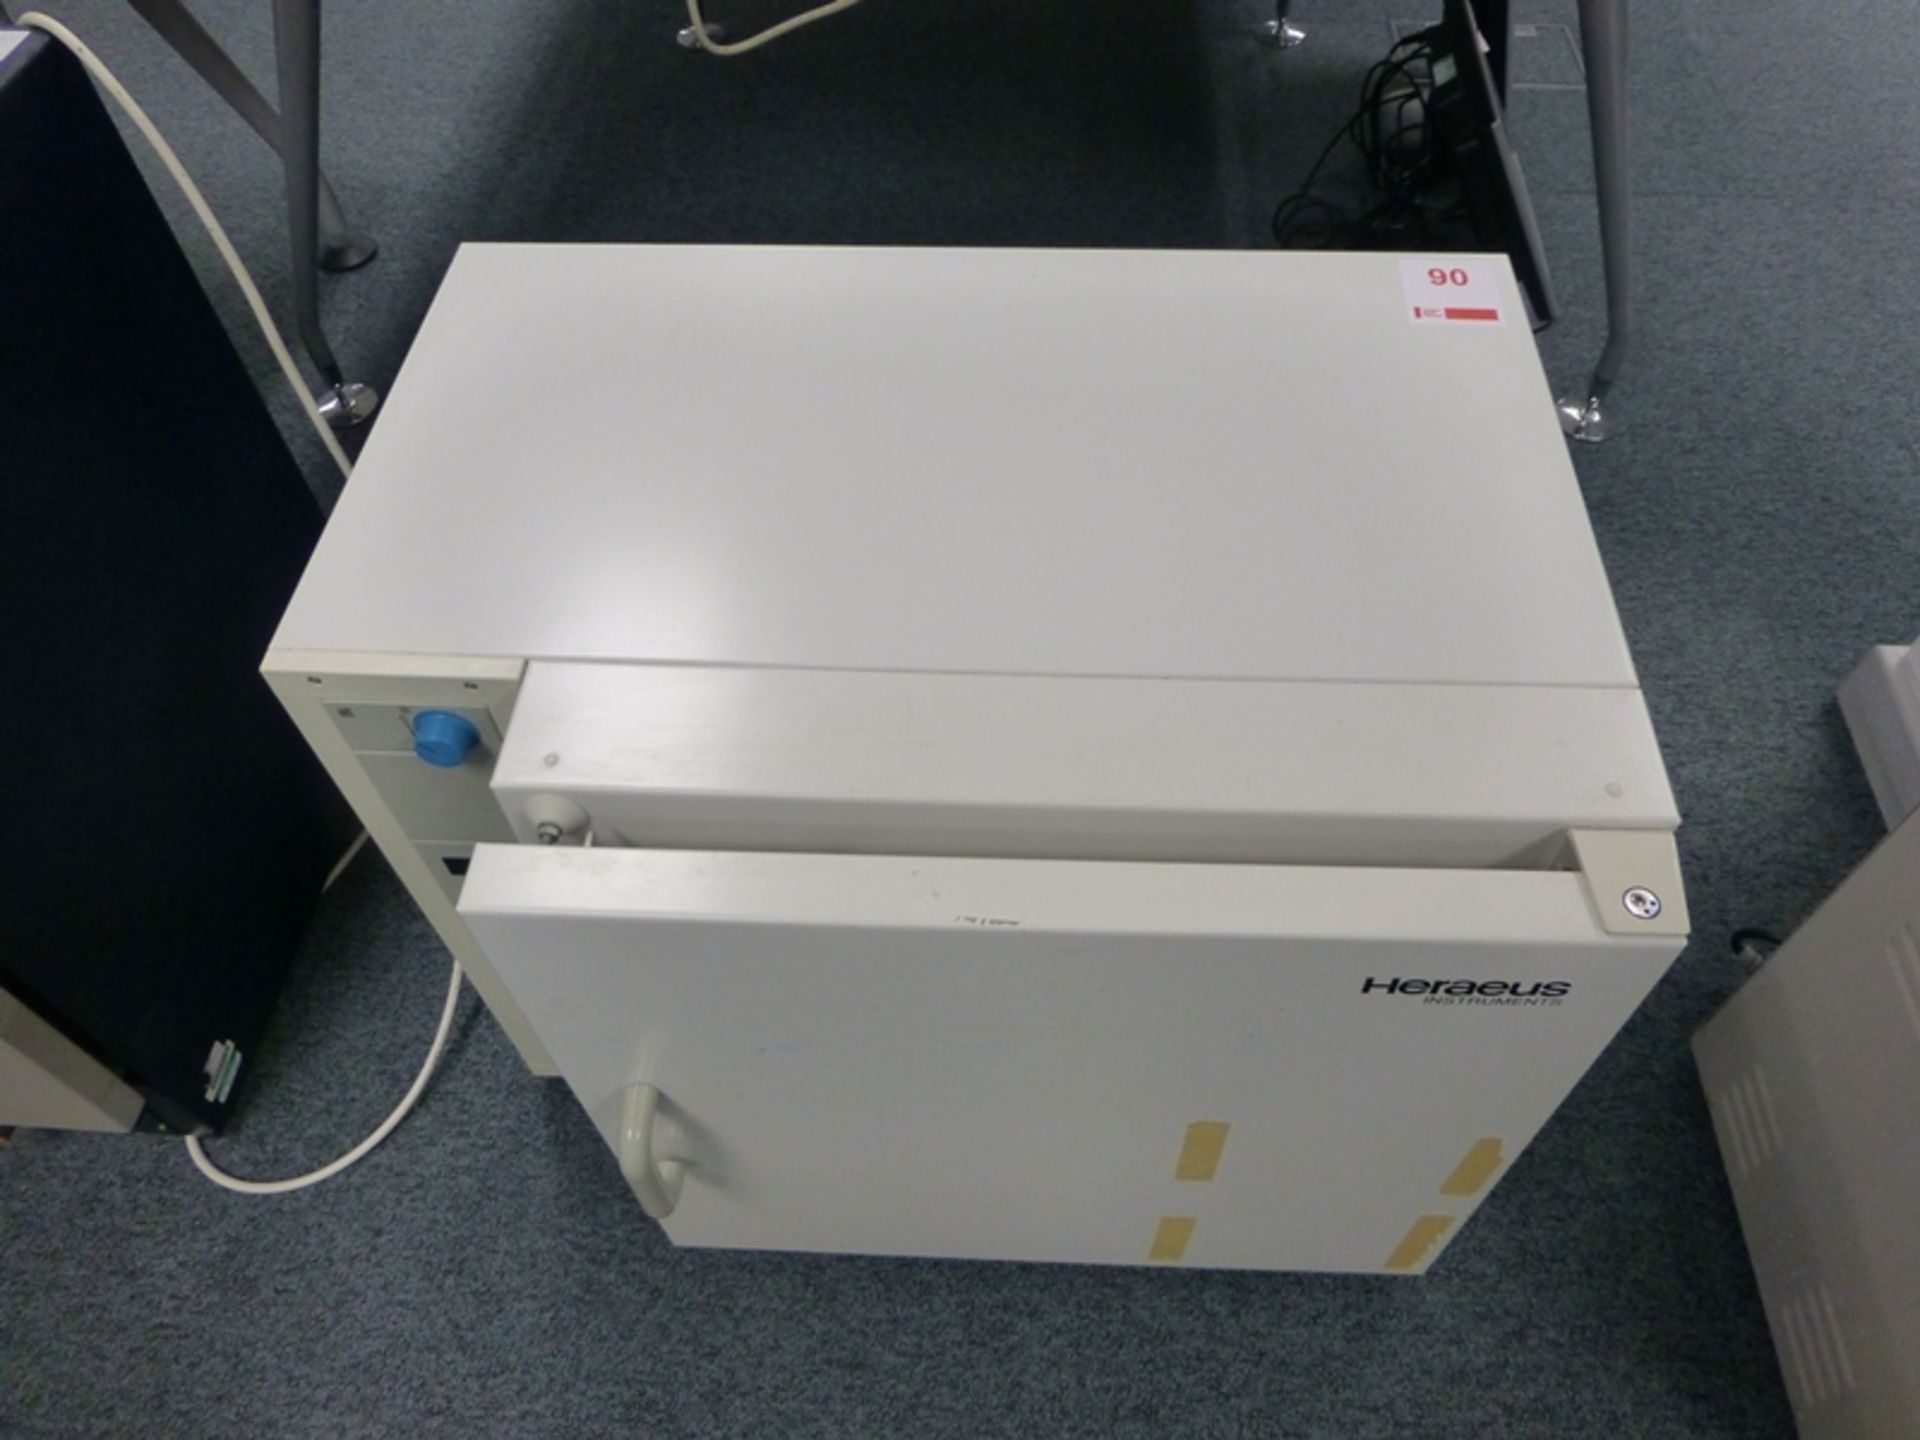 Heraeus benchtop incubator, internal dimensions, 400mm x 340mm x 380mm